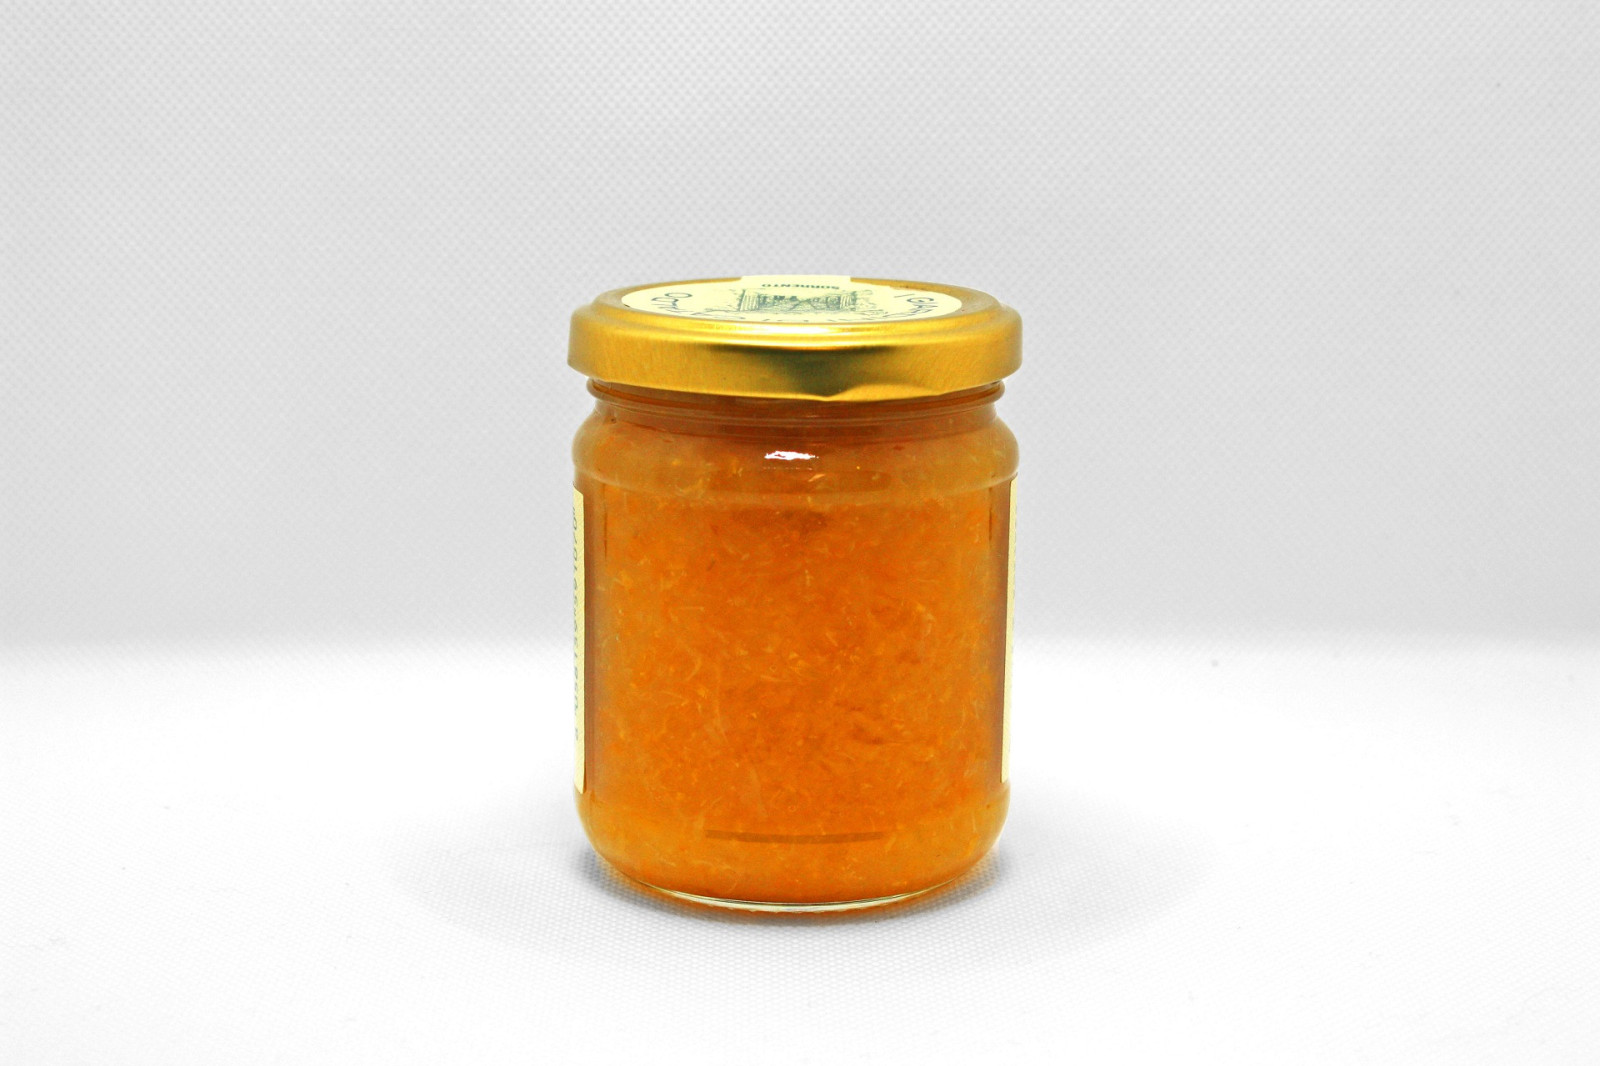 Mandarin Marmalade 250 gr